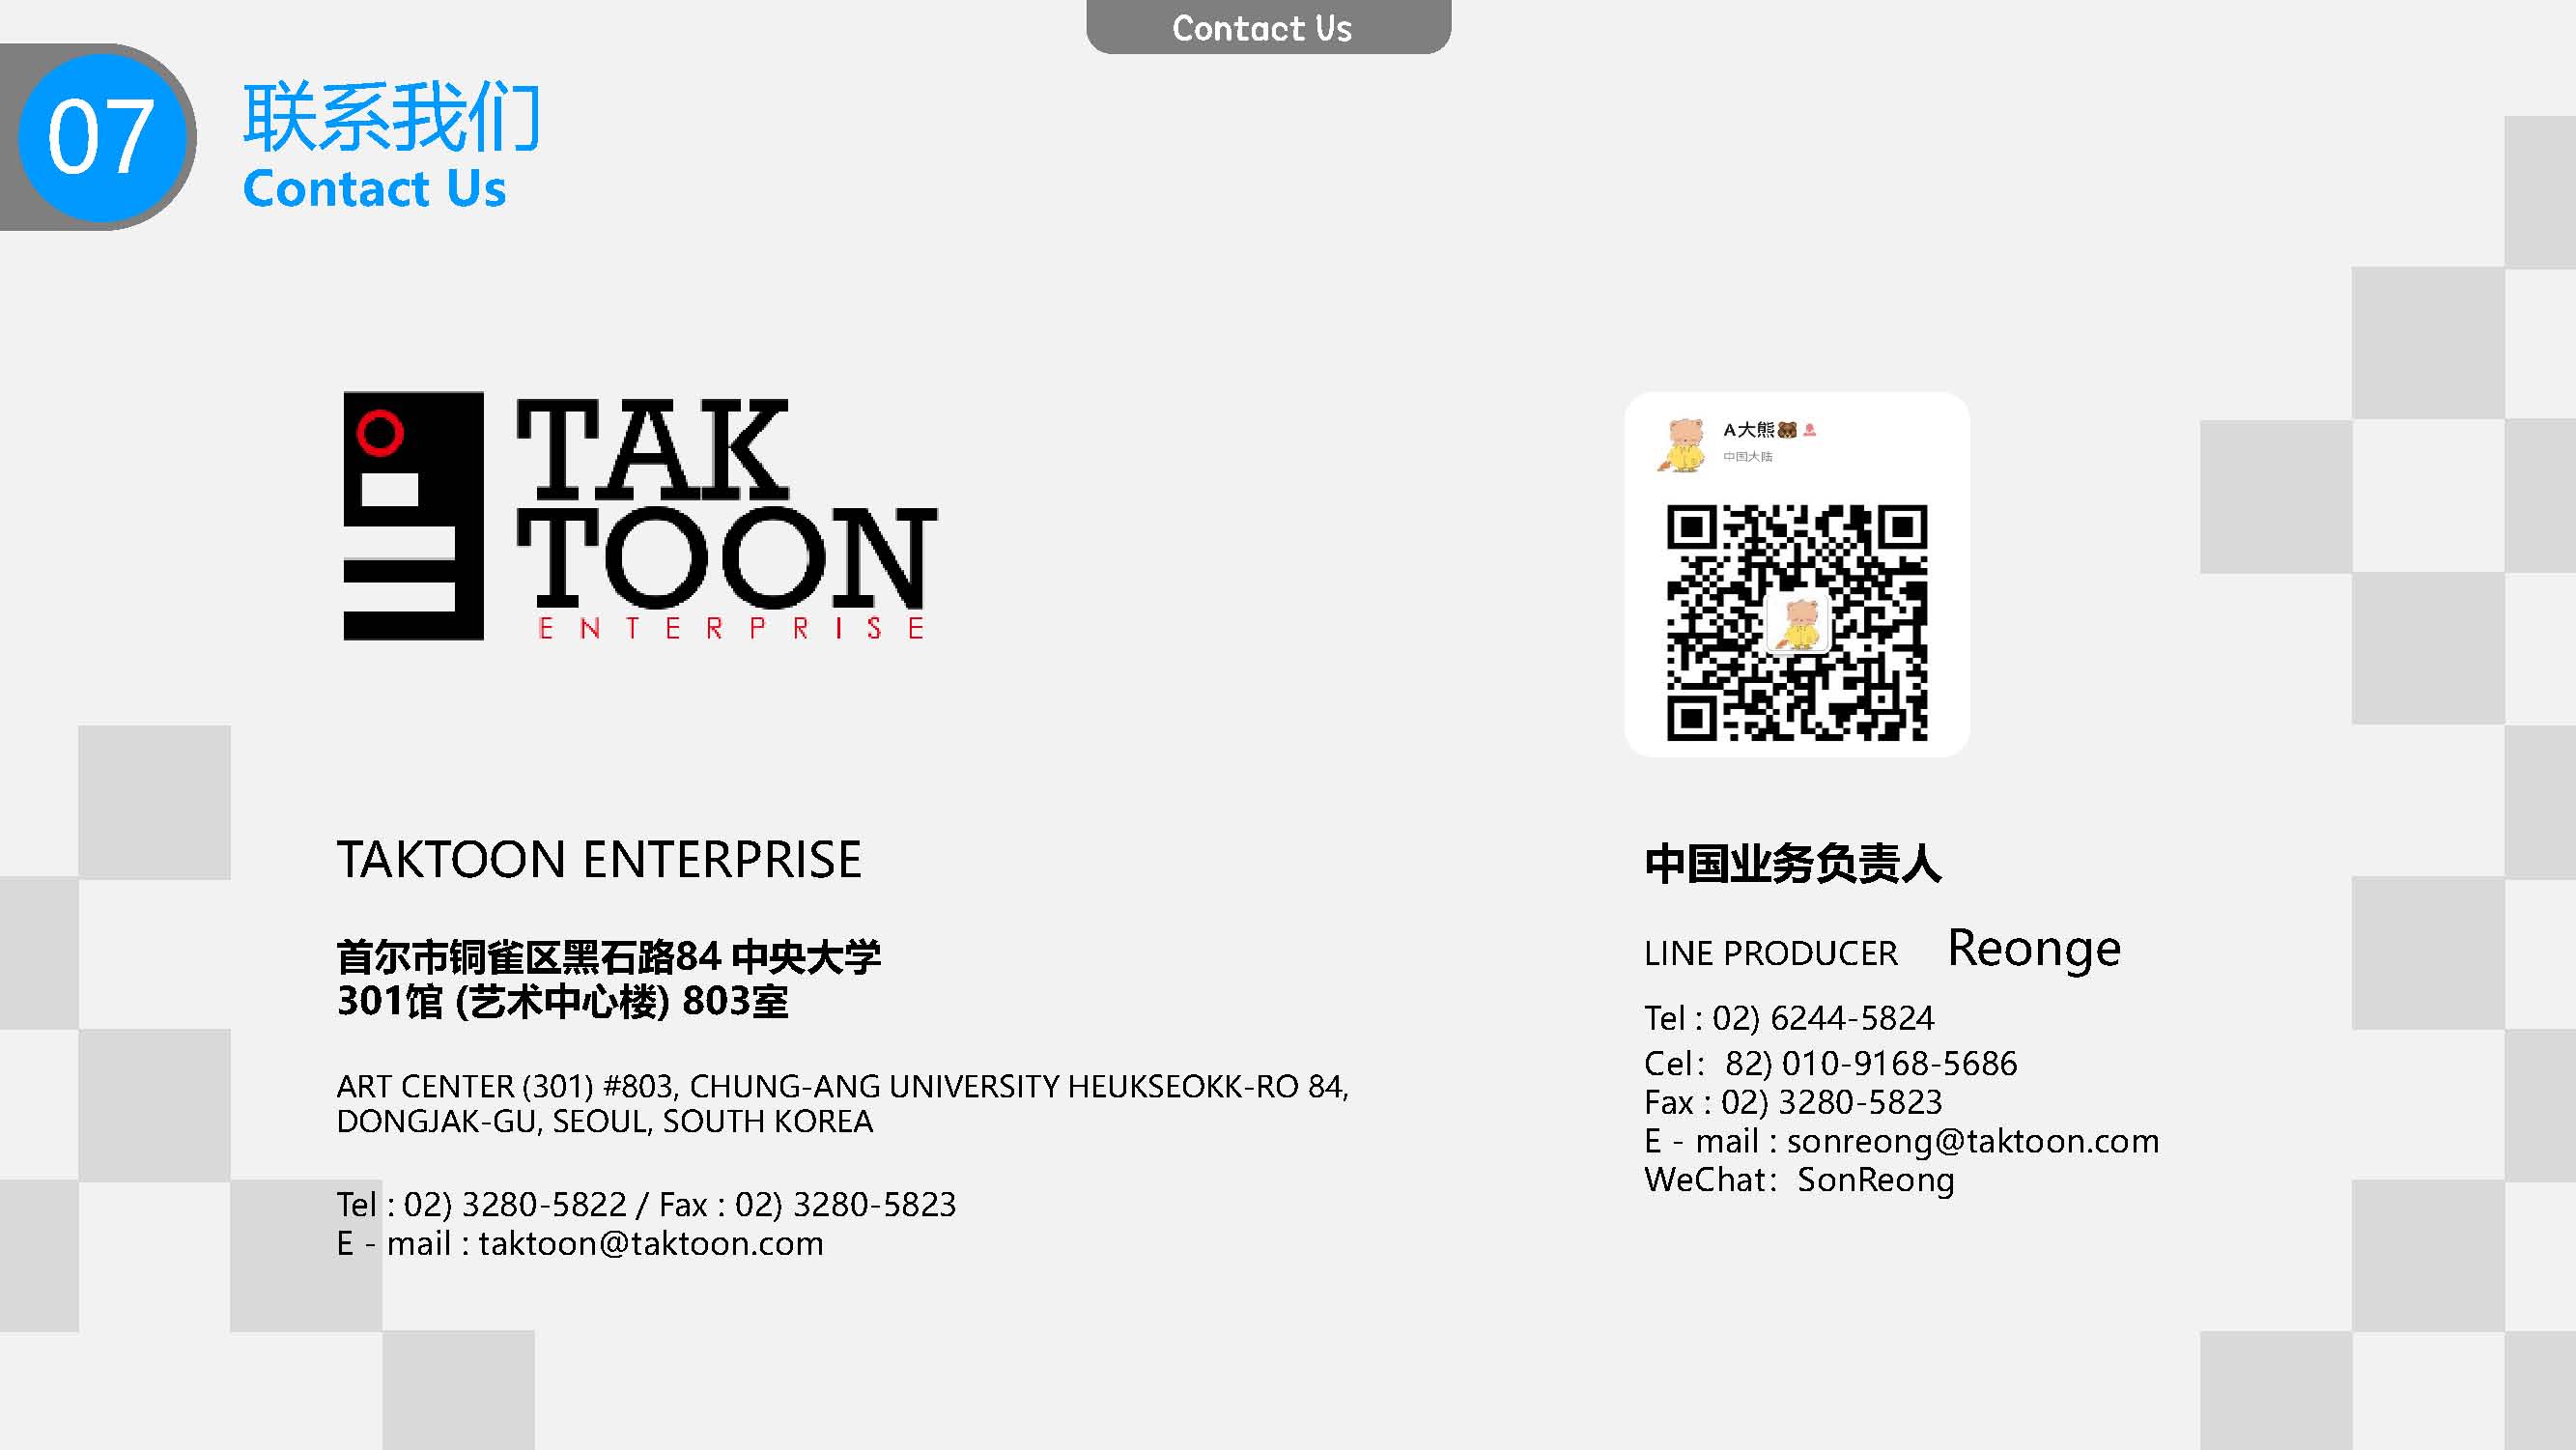 [Taktoon]Tatoon Enterprise company info_页面_20.jpg